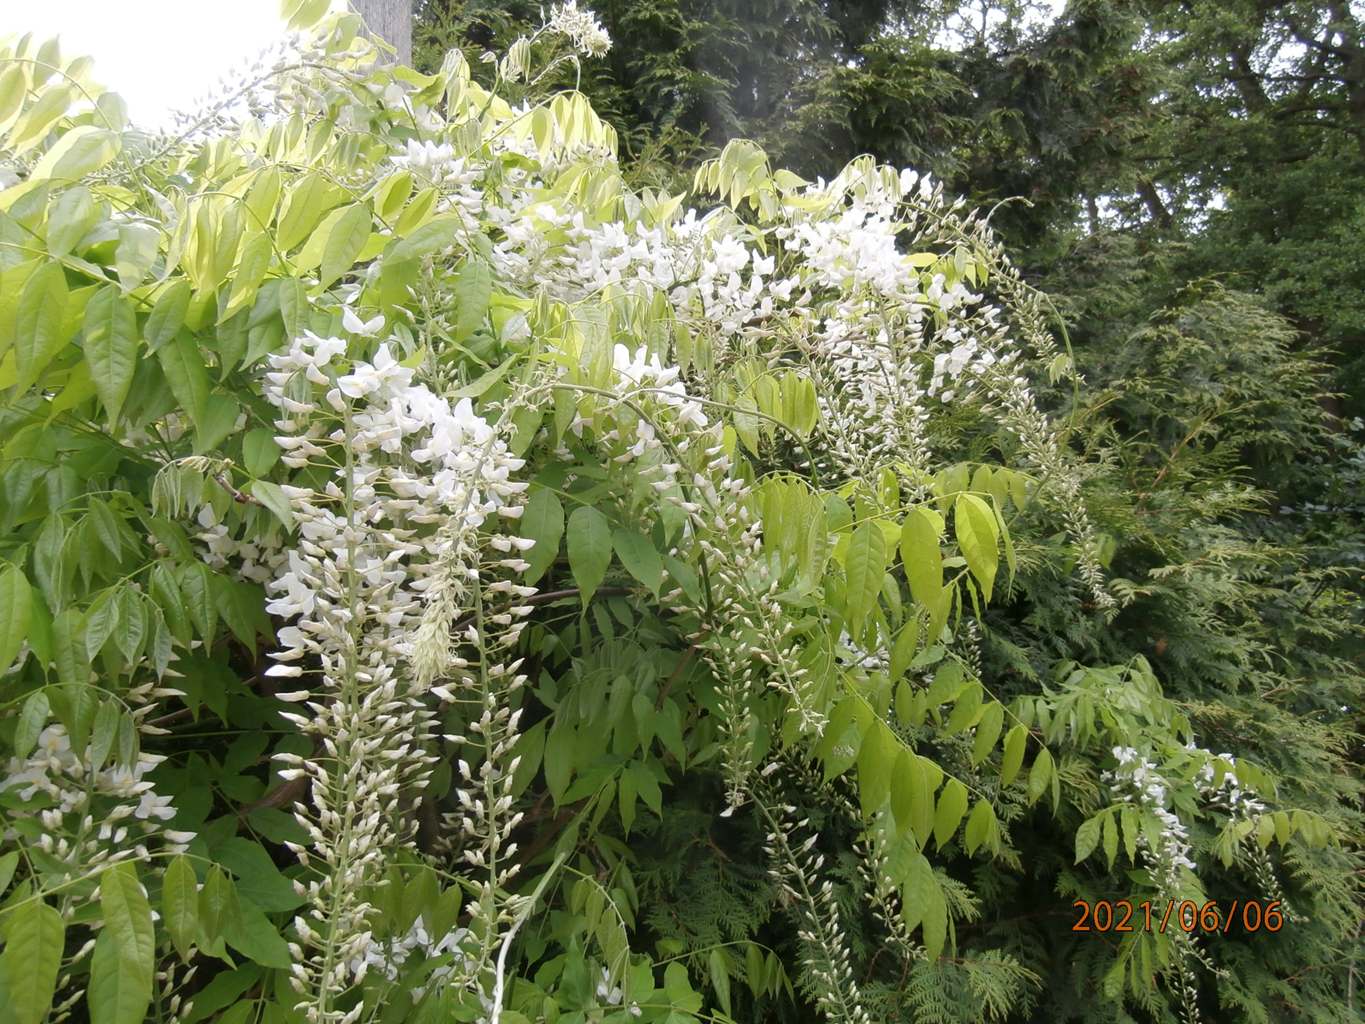 Glicynia kwiecista "Alba" / Wisteria floribunda "Alba"